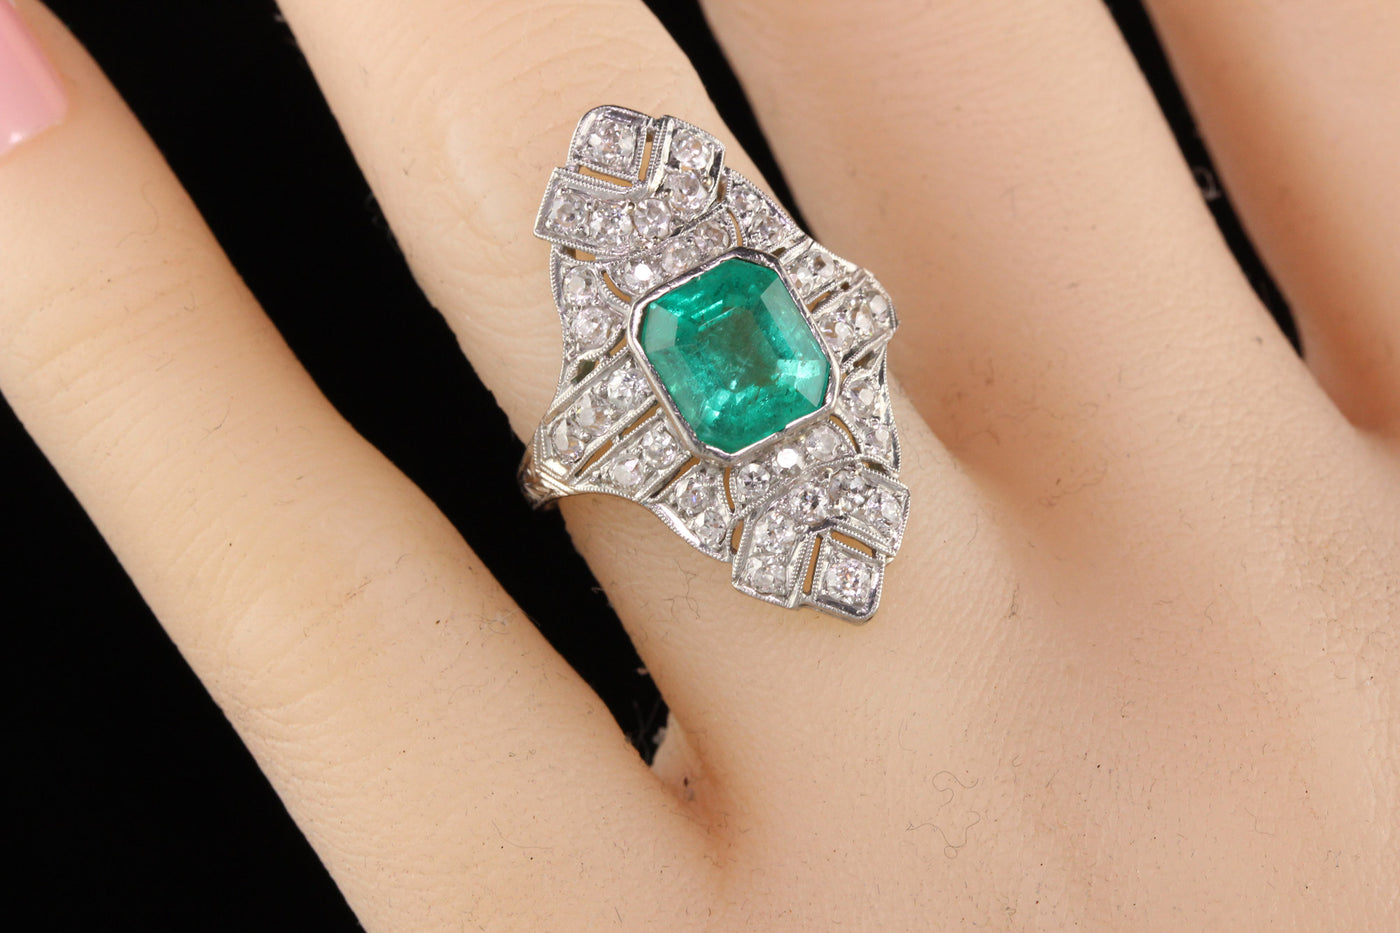 Antique Art Deco Platinum Diamond and Colombian Emerald Shield Ring